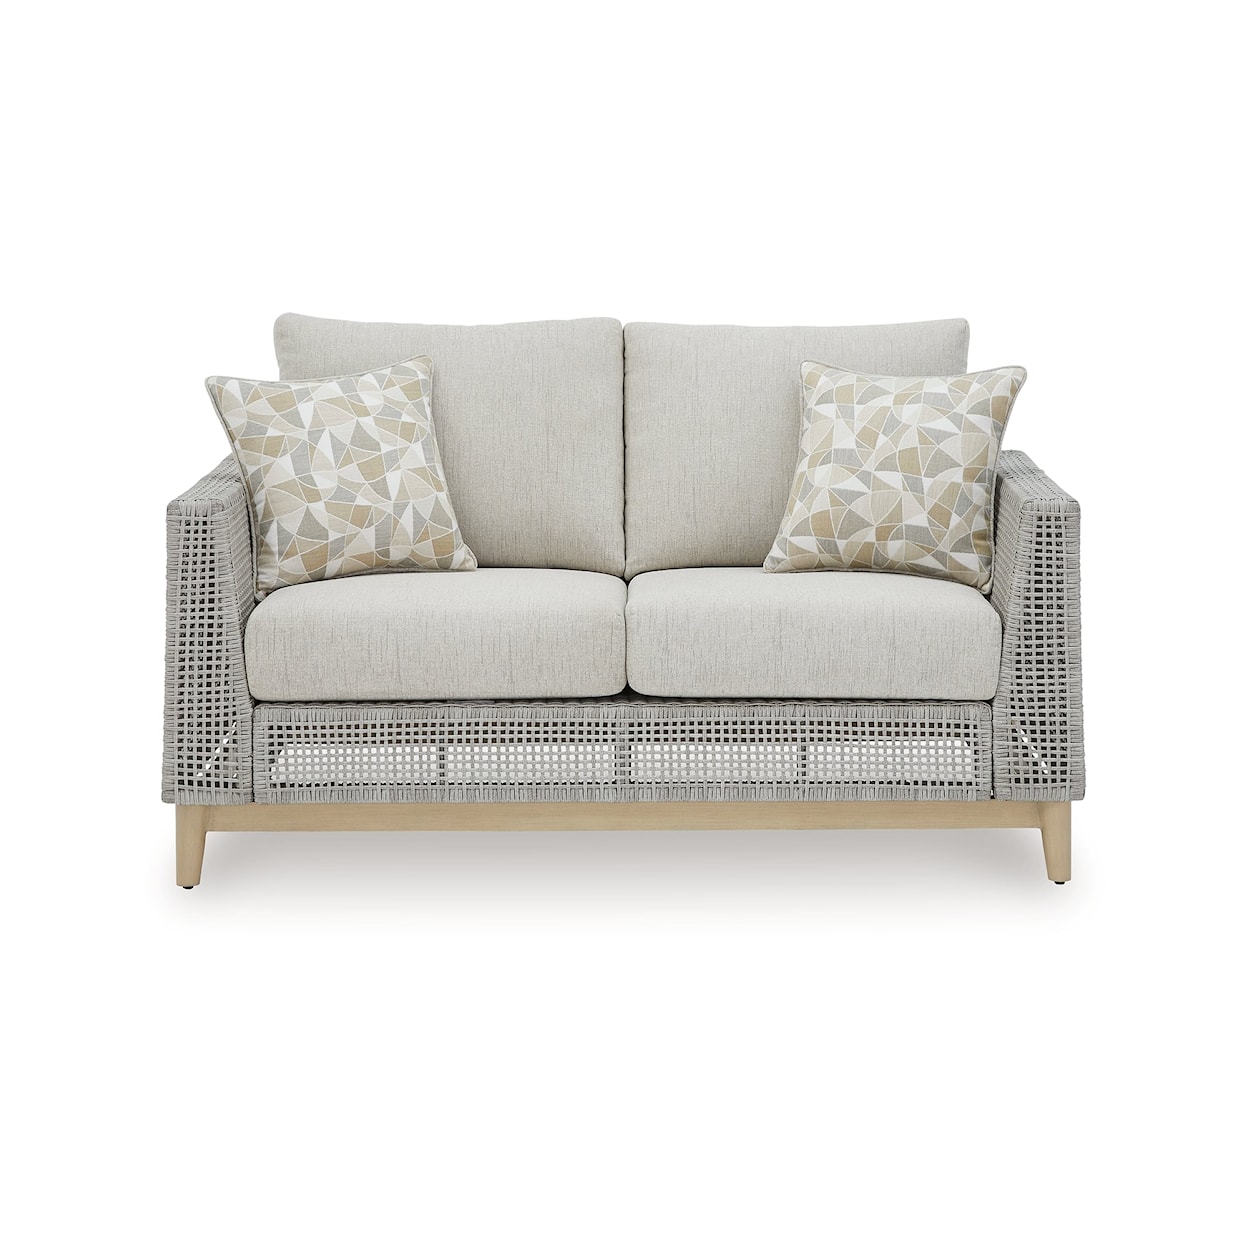 Ashley Furniture Signature Design Seton Creek Outdoor Loveseat with Cushion